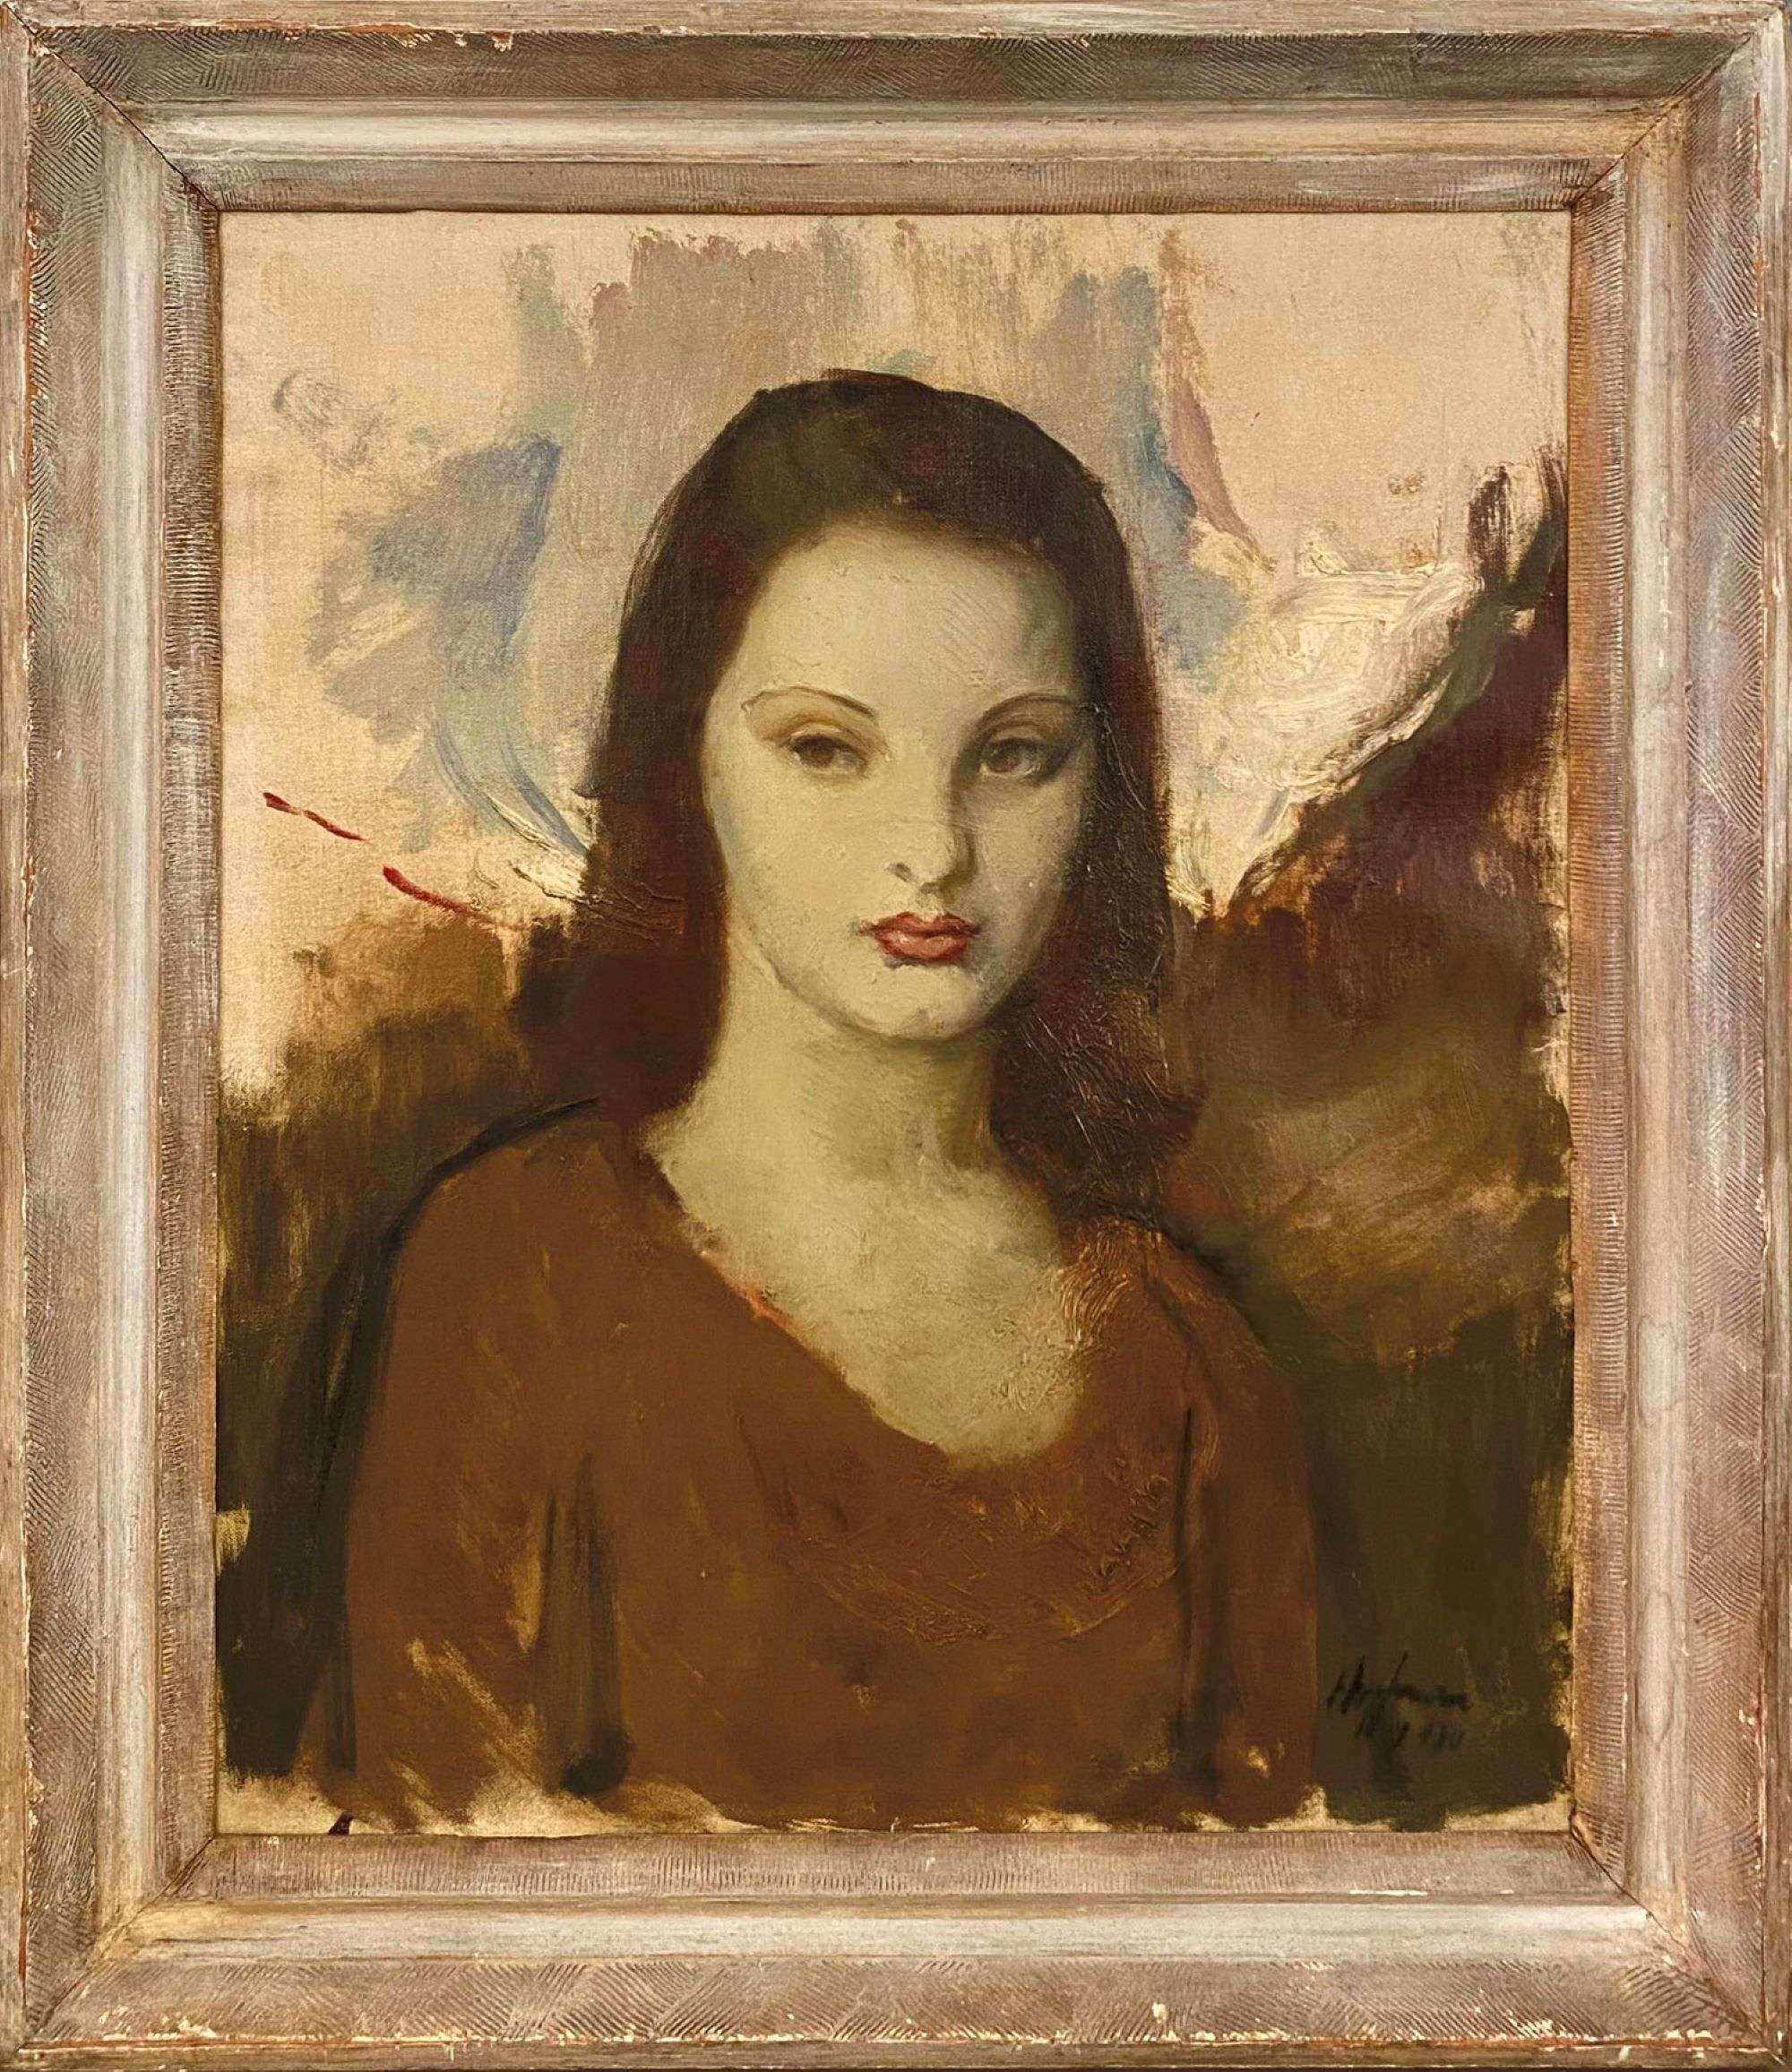 Irwin D. Hoffman (American, 1901-1989) ‘Portrait of a Mexican Girl